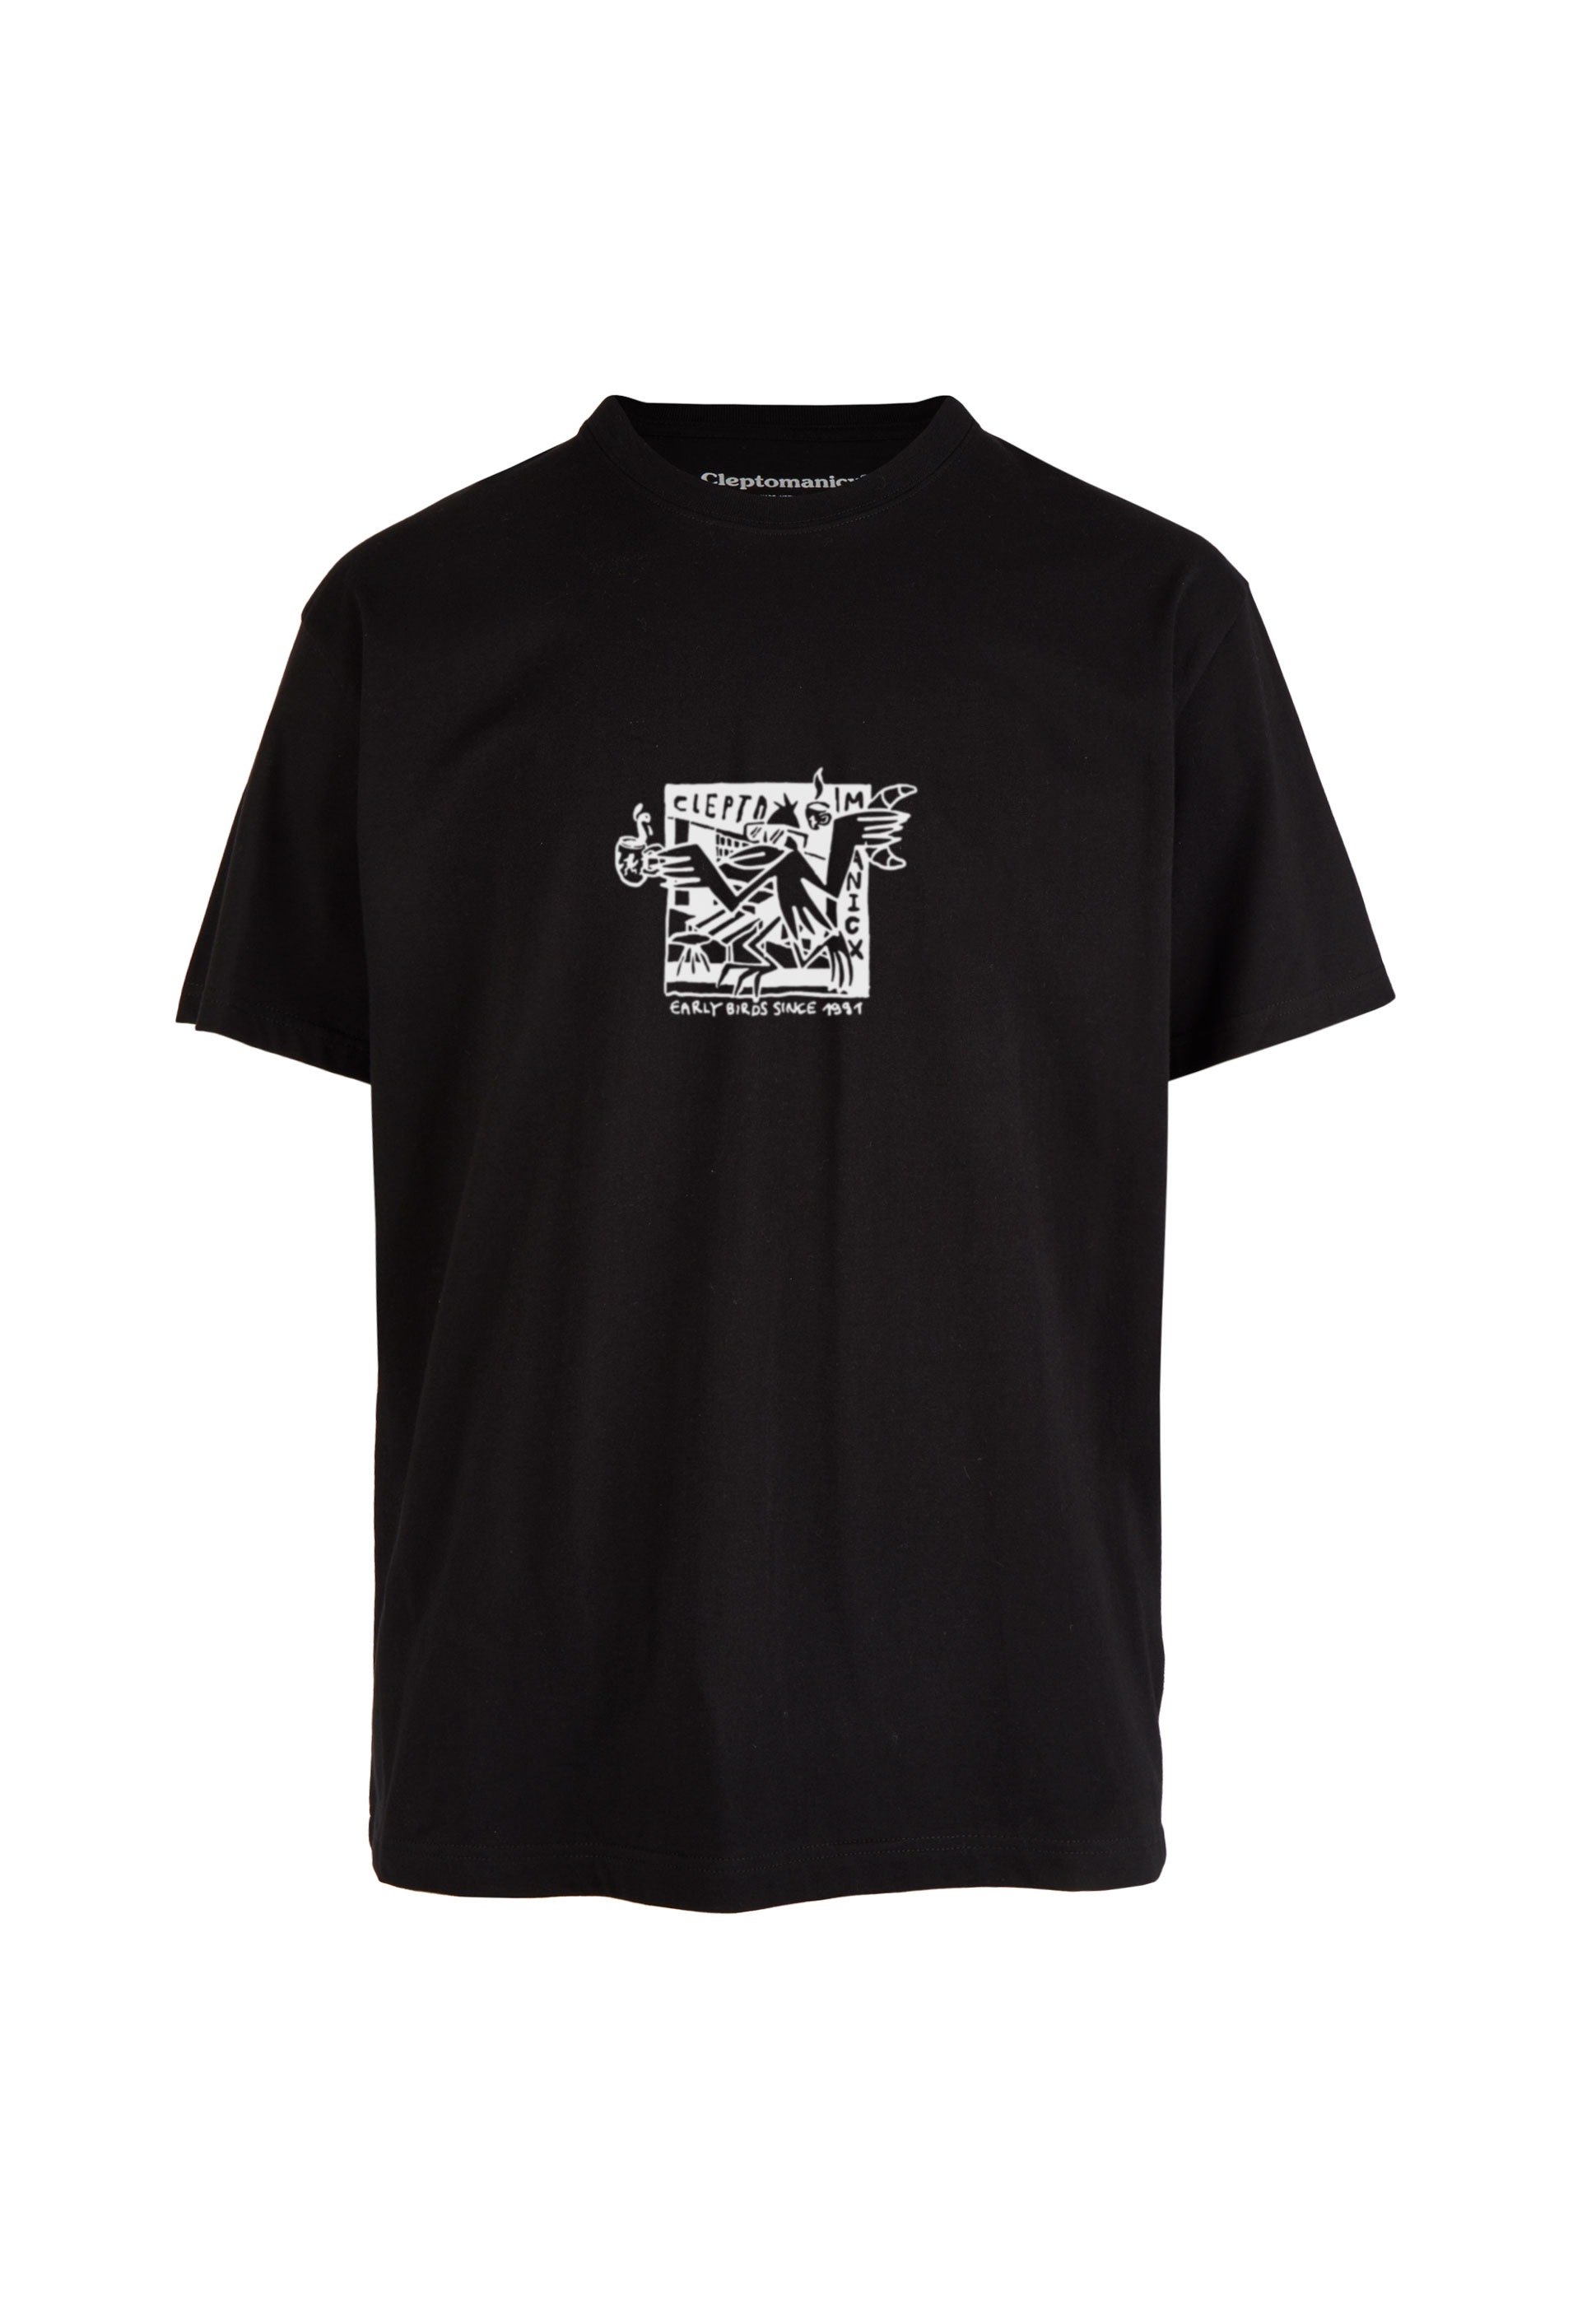 Cleptomanicx T-Shirt »Early Birds«, mit tollem Frontprint